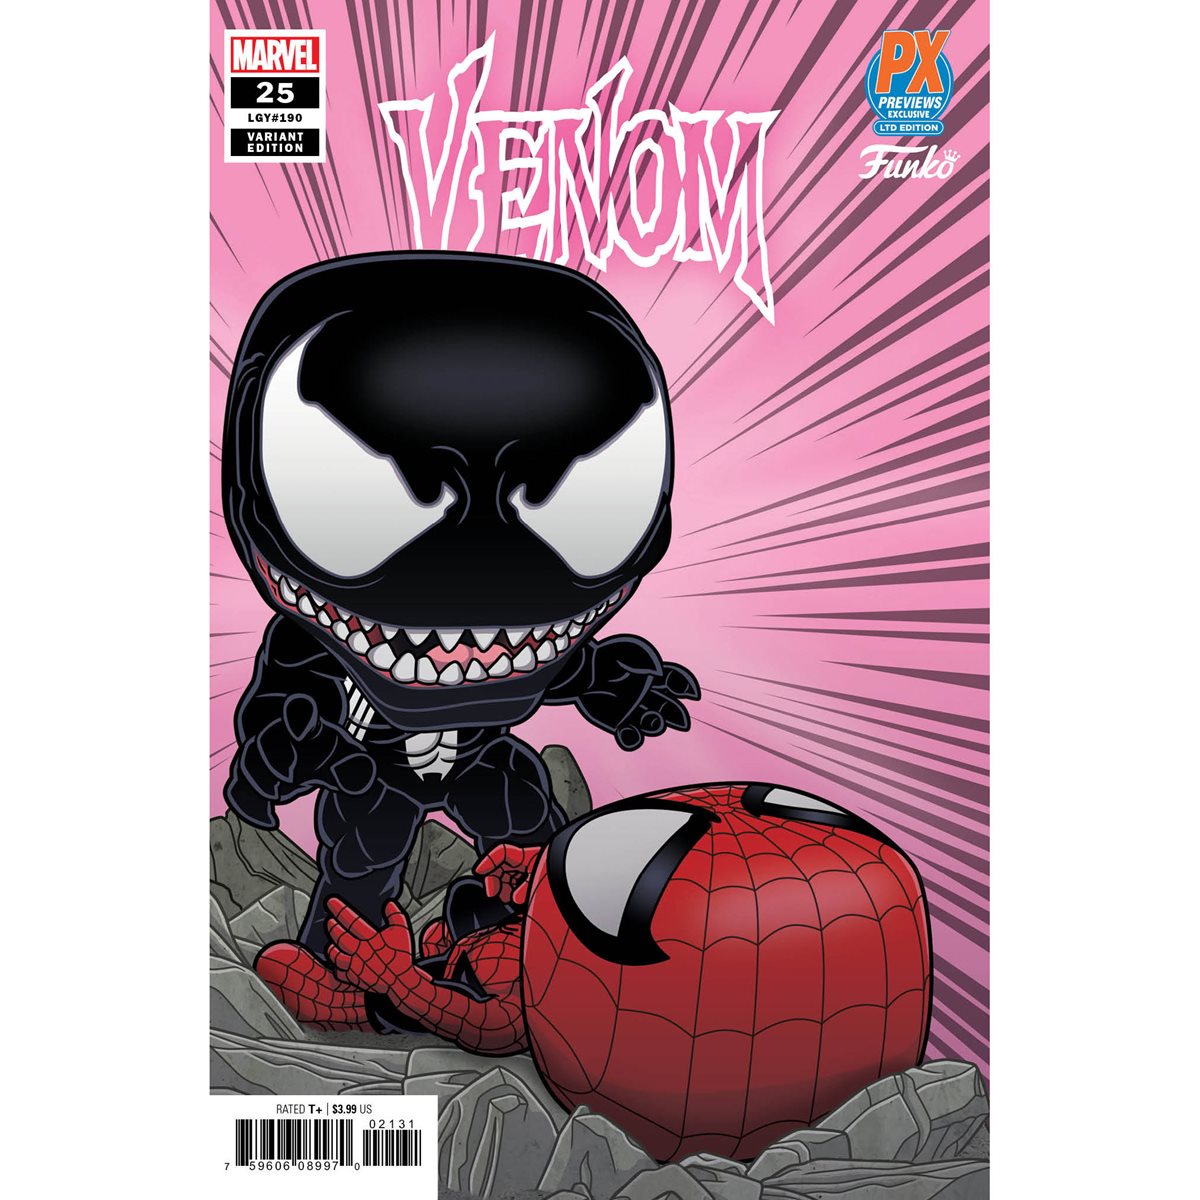 Marvel 2-Pack Funko Pop Venom Vs Spider-man Exclusive Previews